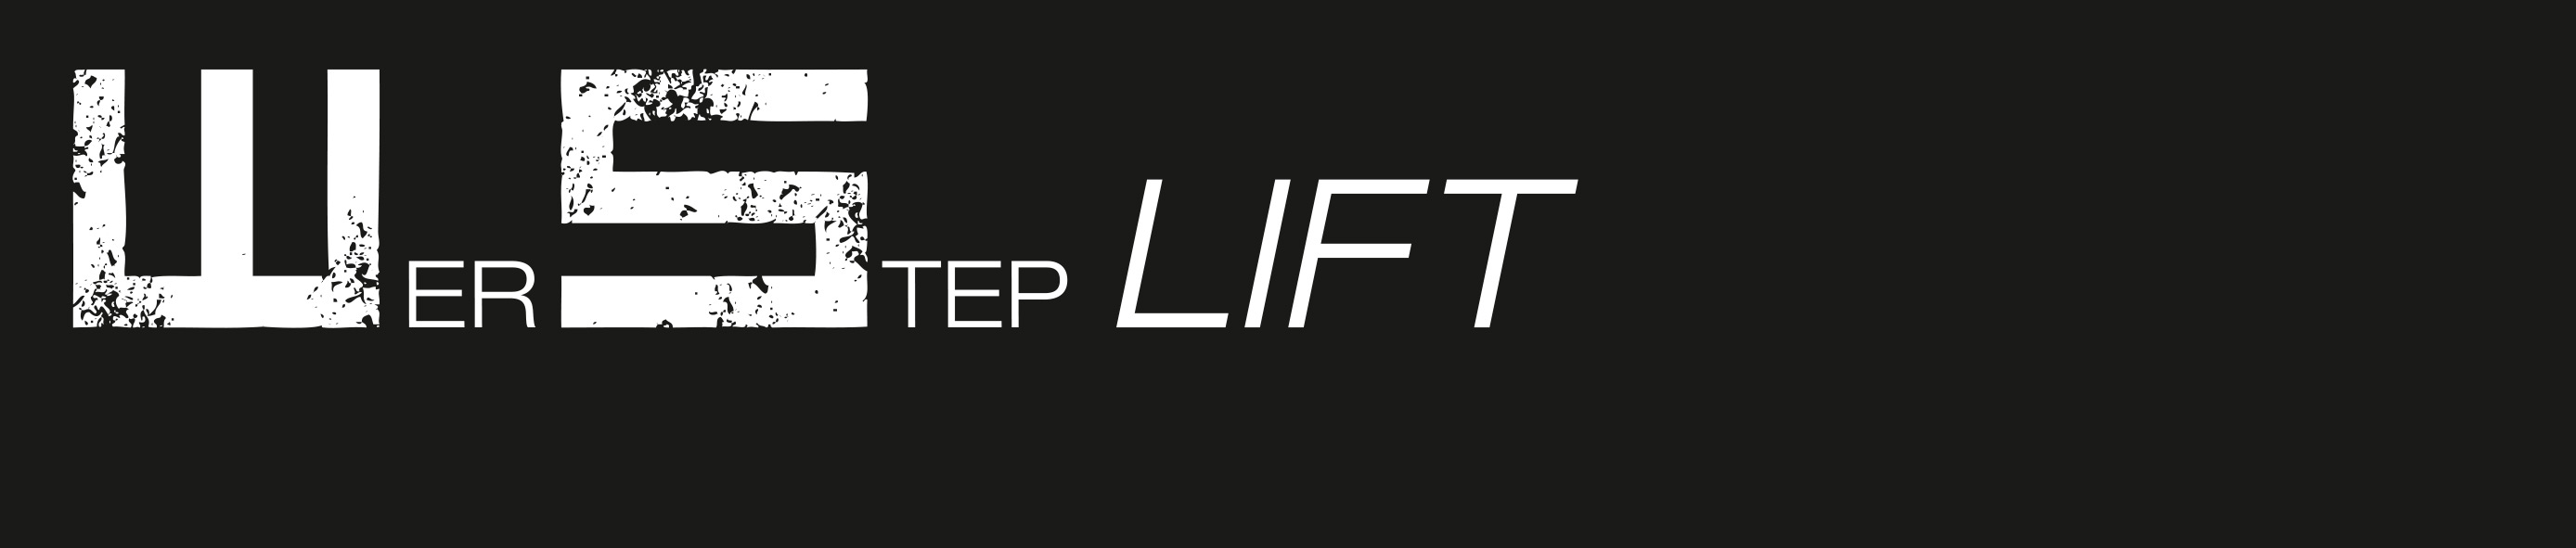 WERSTEP lift logo